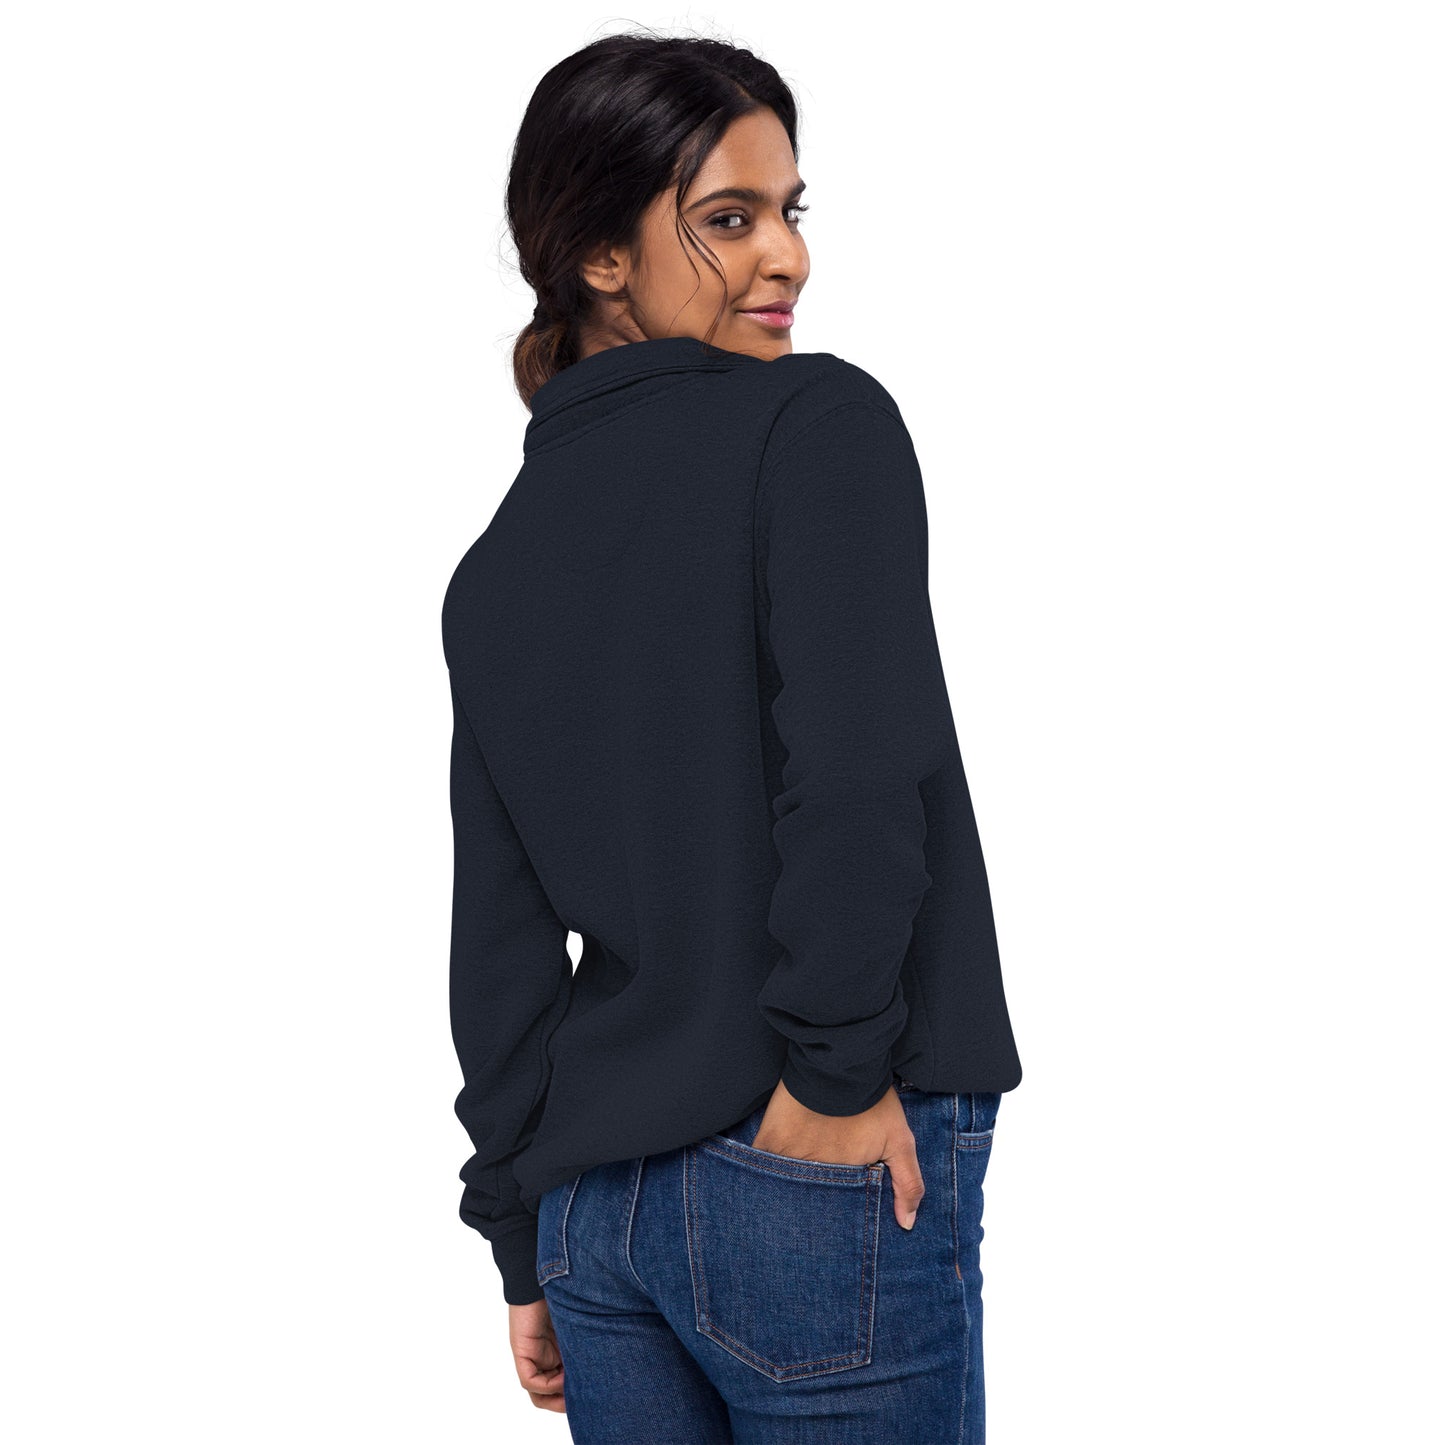 Unisex fleece pullover - A Black Woman Made Me